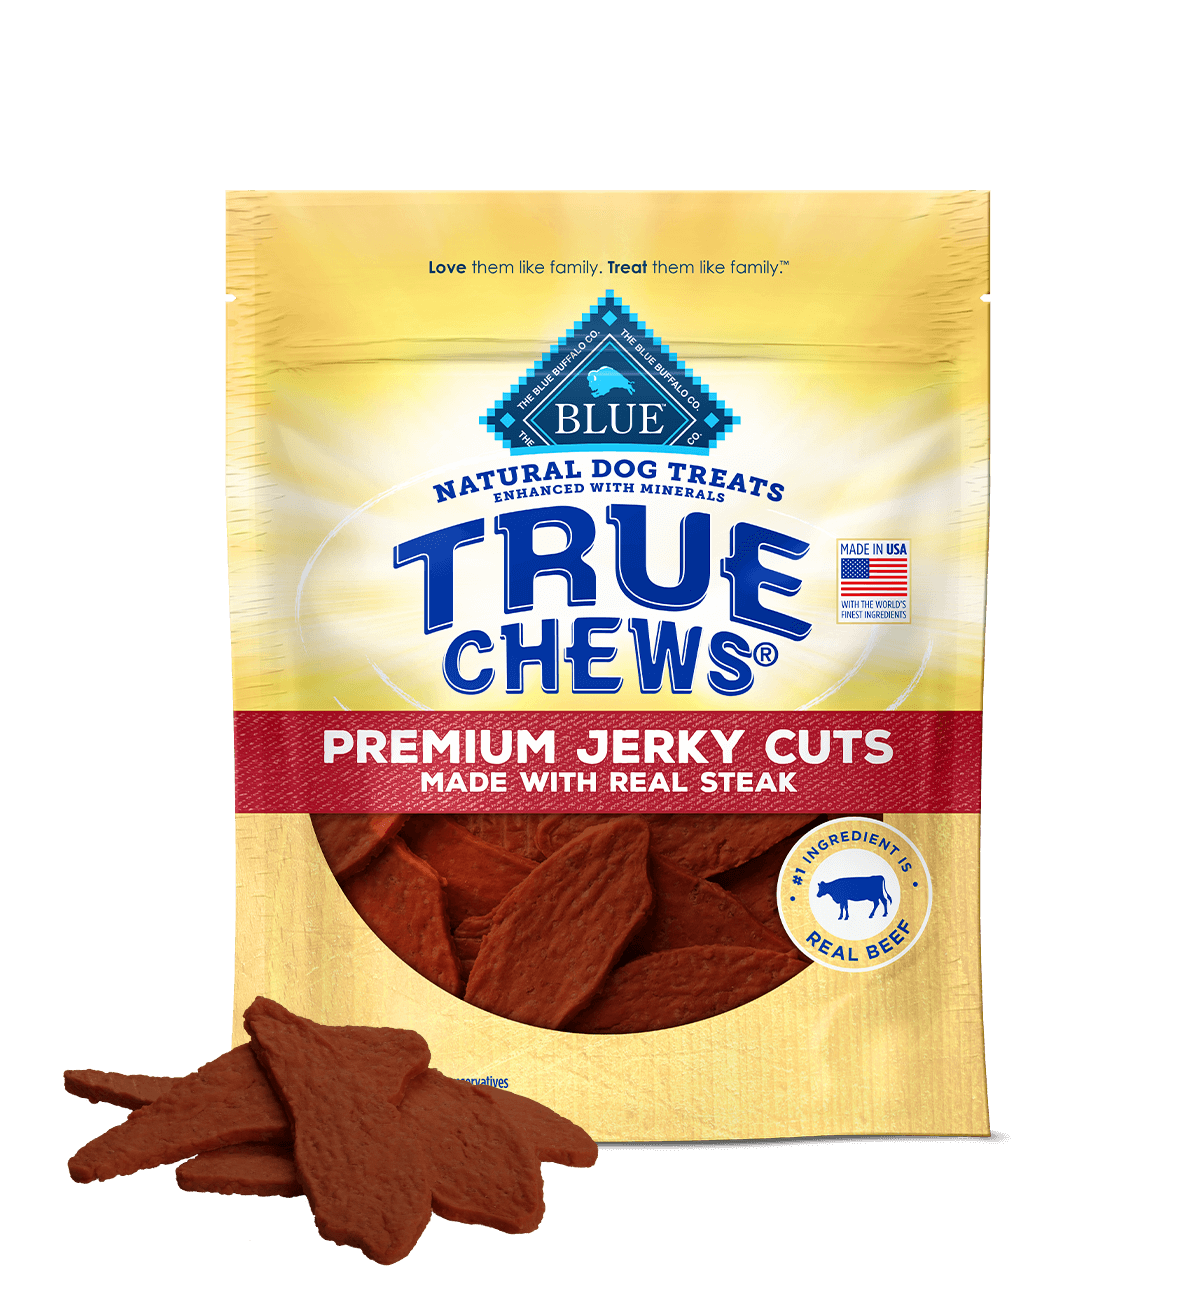 blue true chews ® meaty premium steak jerky cuts dog treats